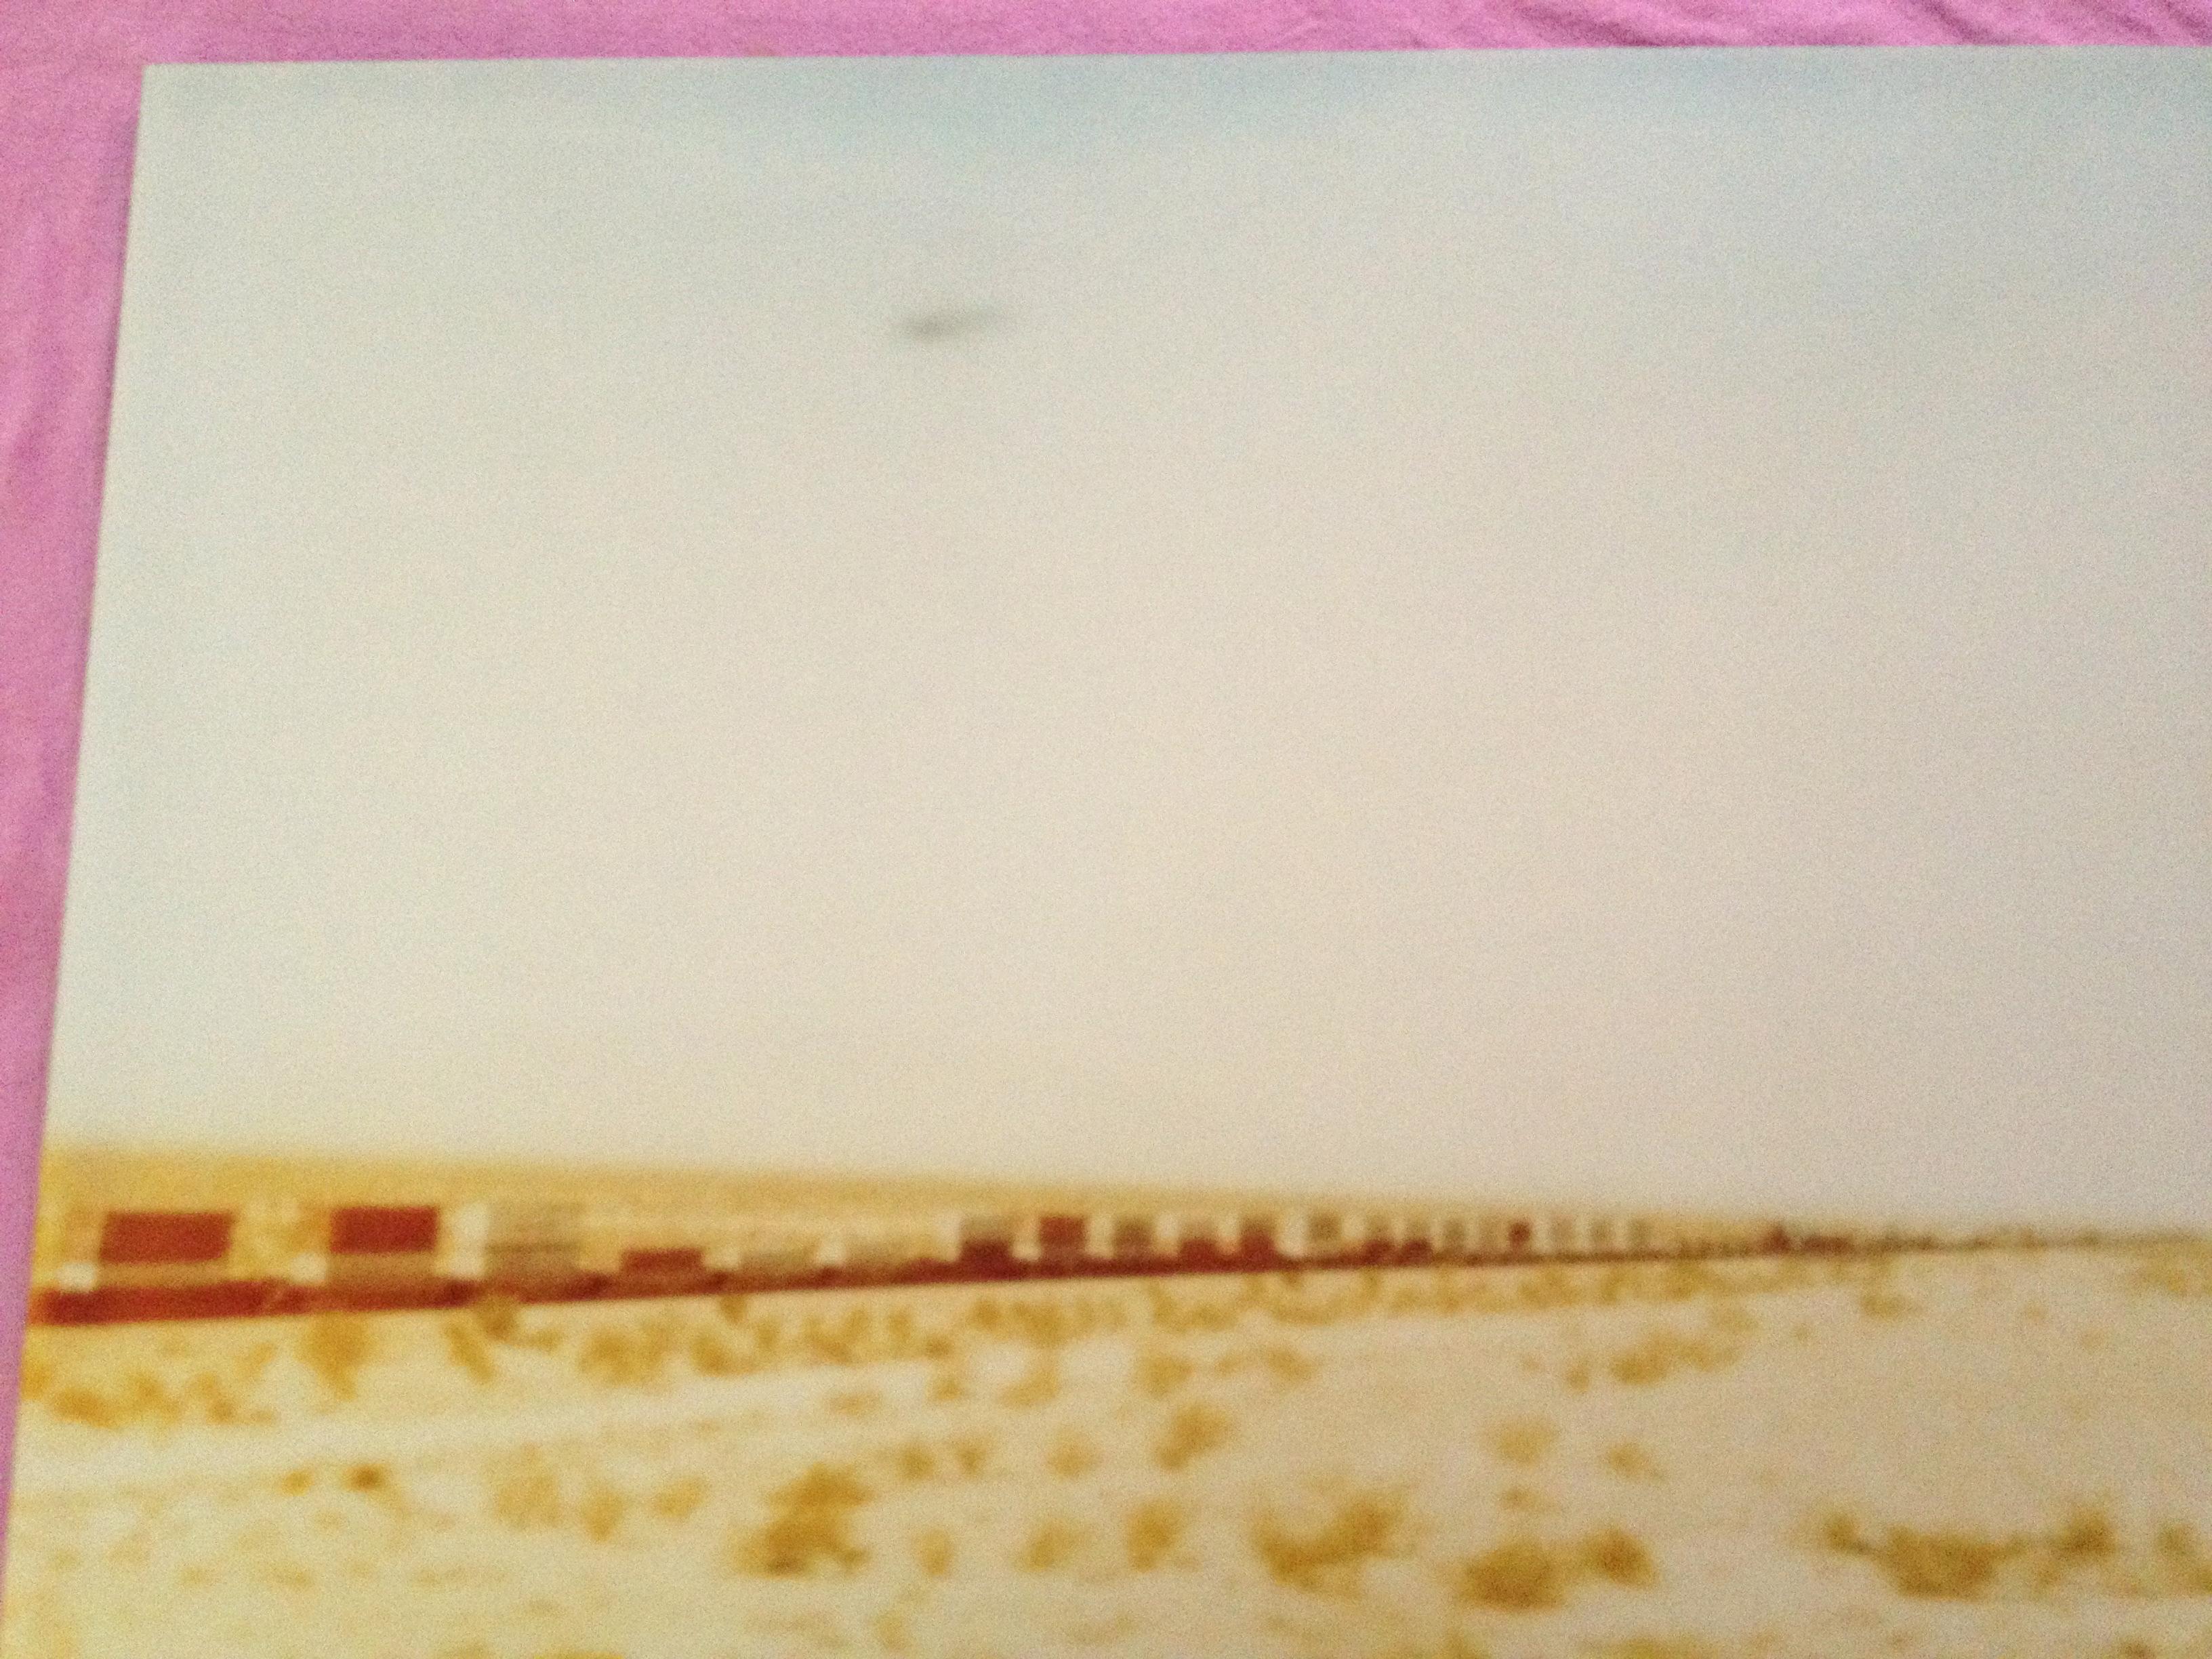 Train crosses Plain (Wastelands) - analog hand-print, mounted - Polaroid, Color - Beige Landscape Photograph by Stefanie Schneider